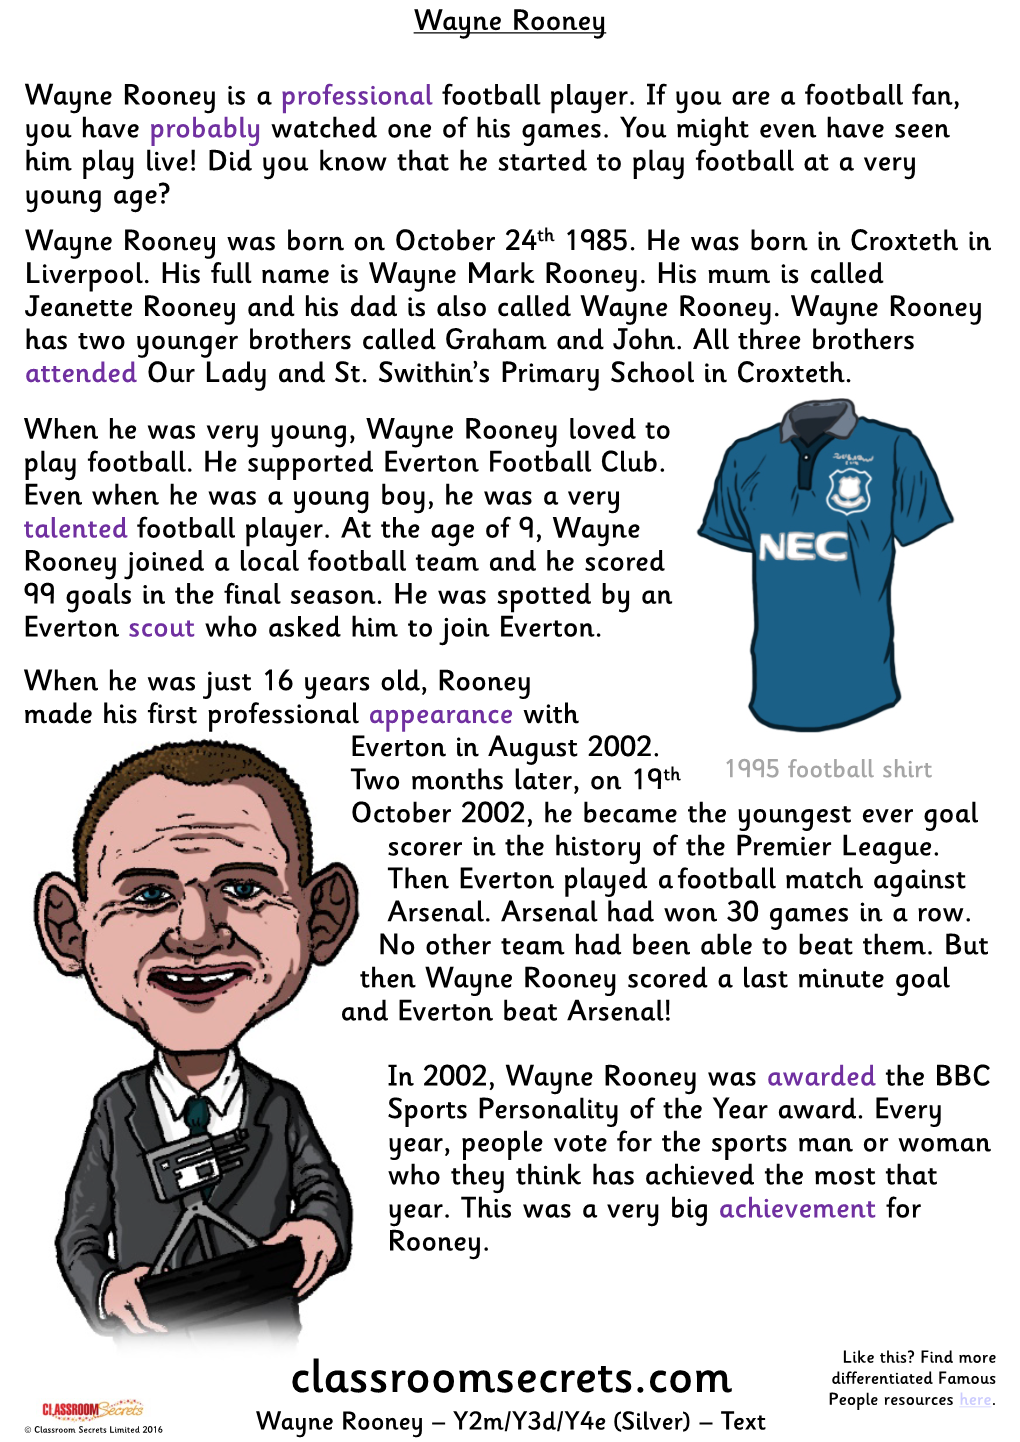 Wayne Rooney Biography Example